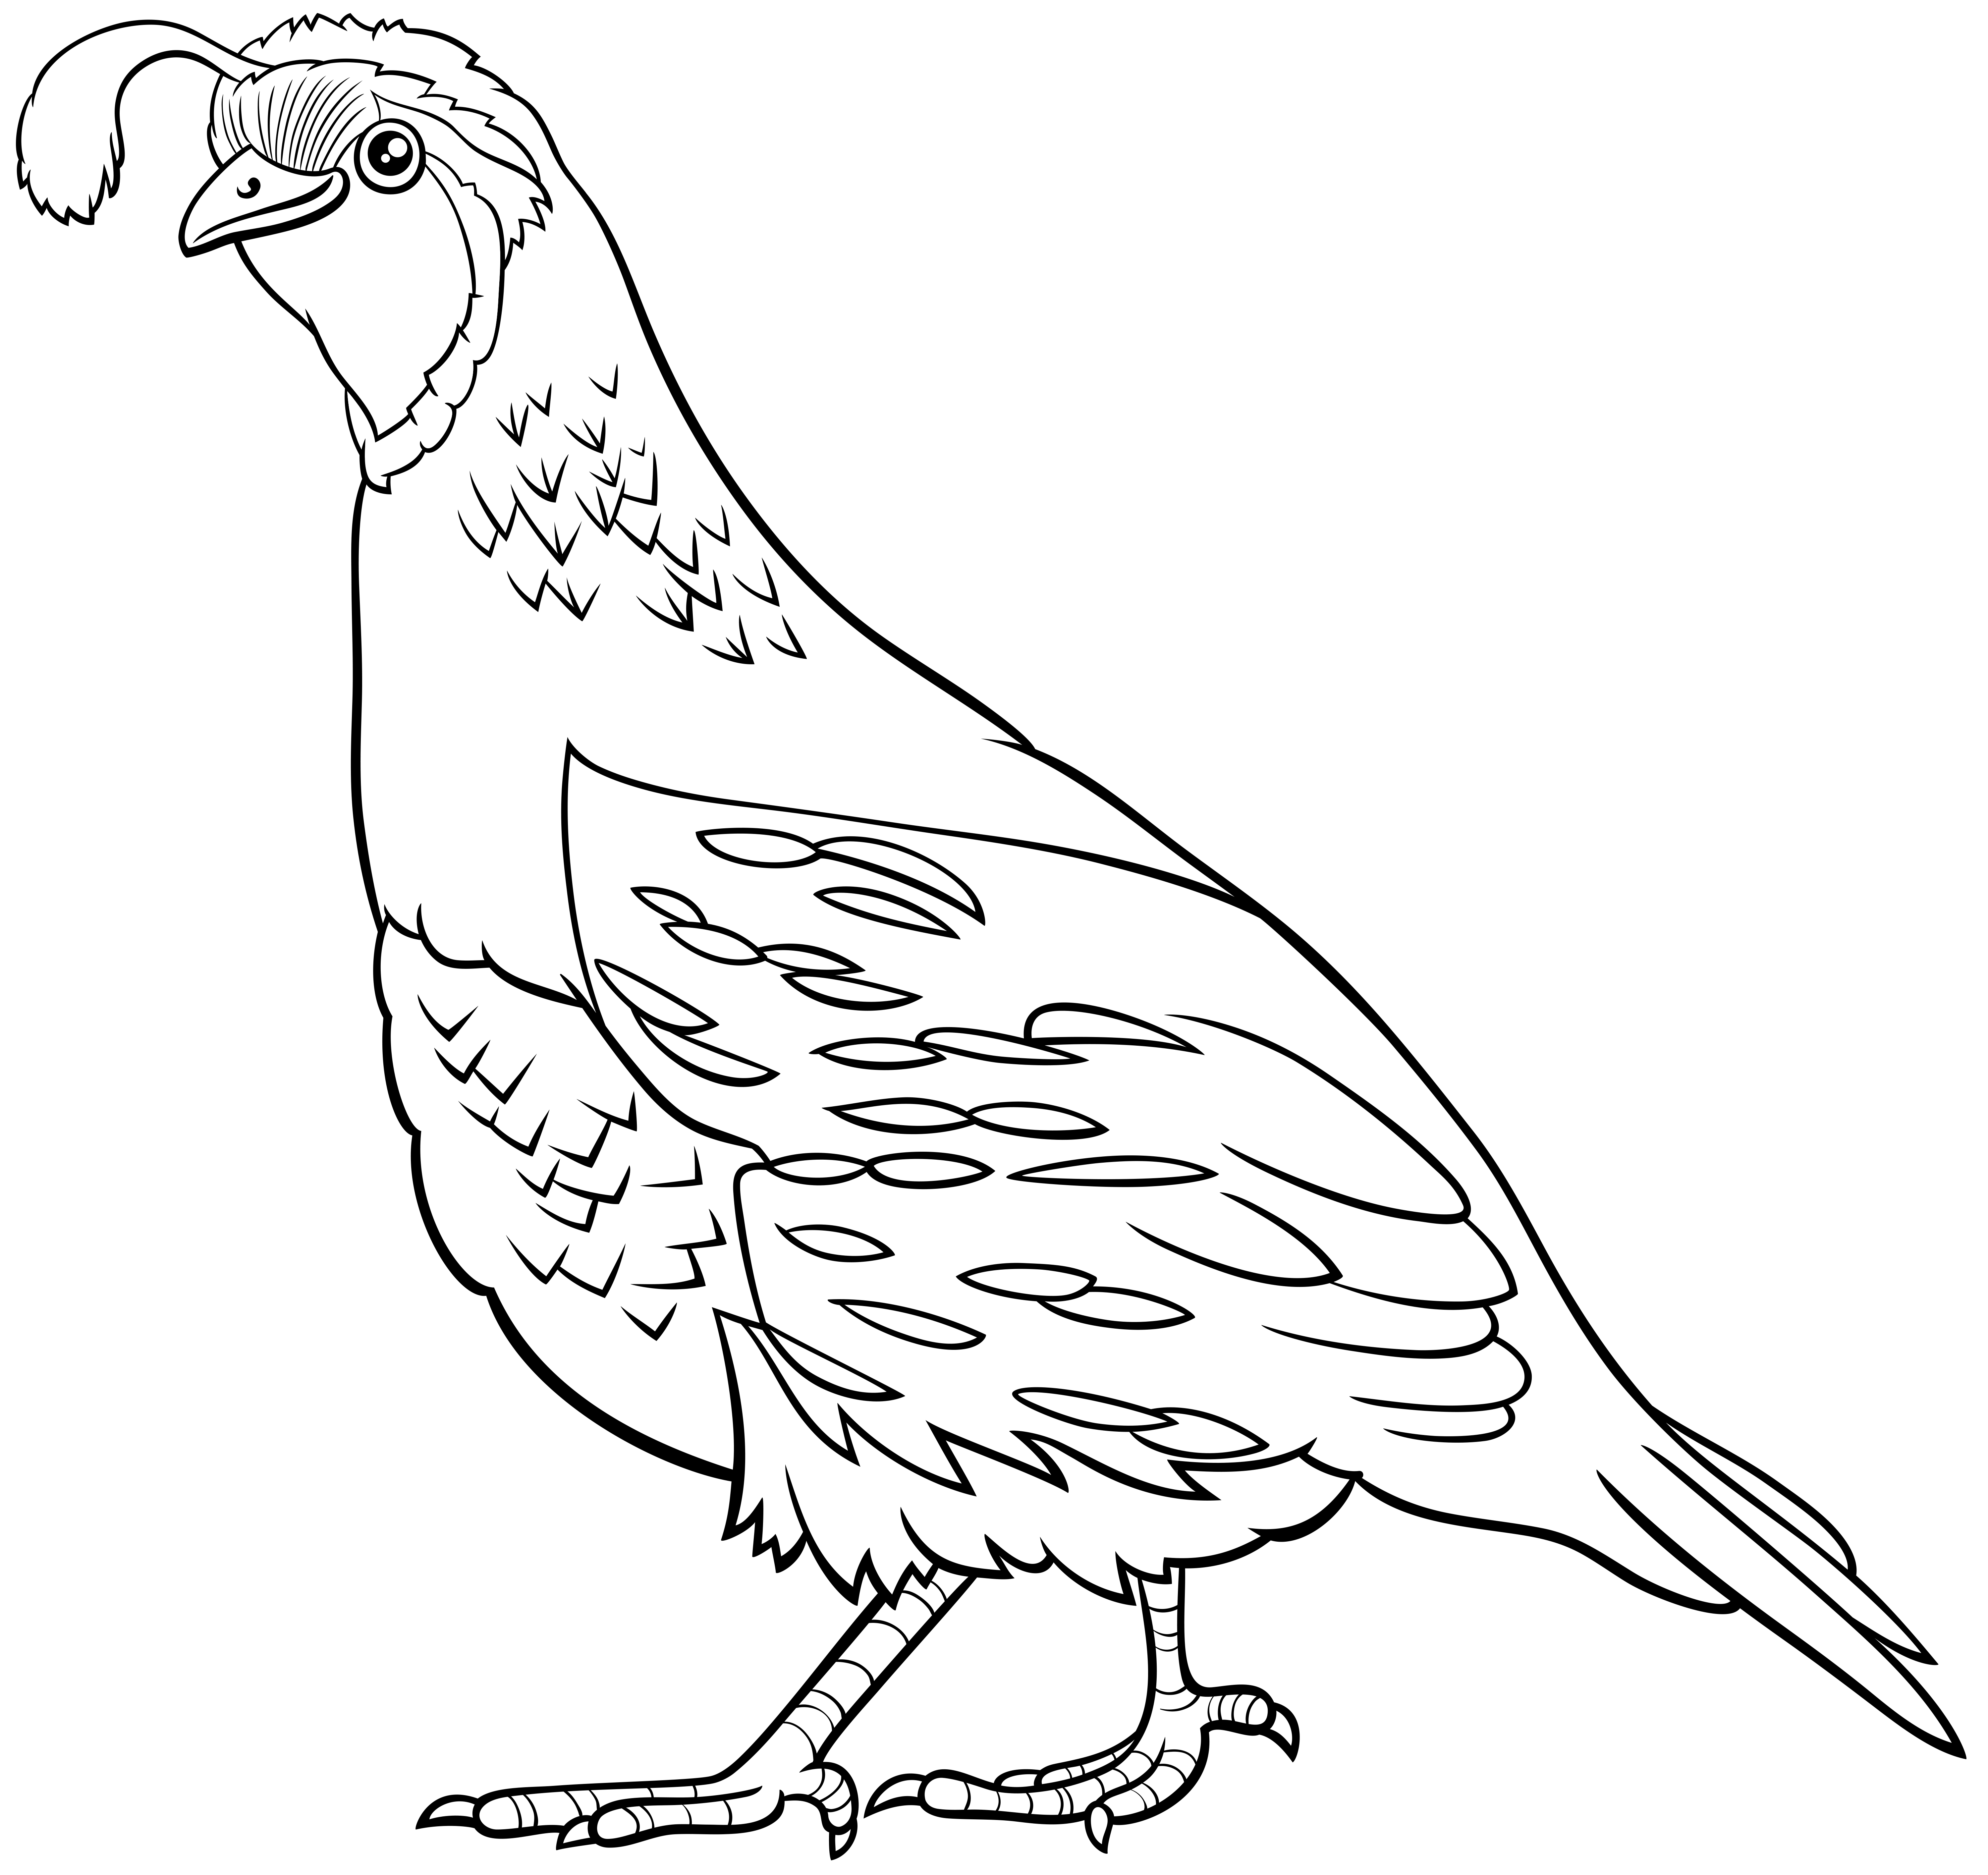 Download Cartoon Quail Bird Comic Animal Character Coloring Book Page 1945027 Vector Art At Vecteezy